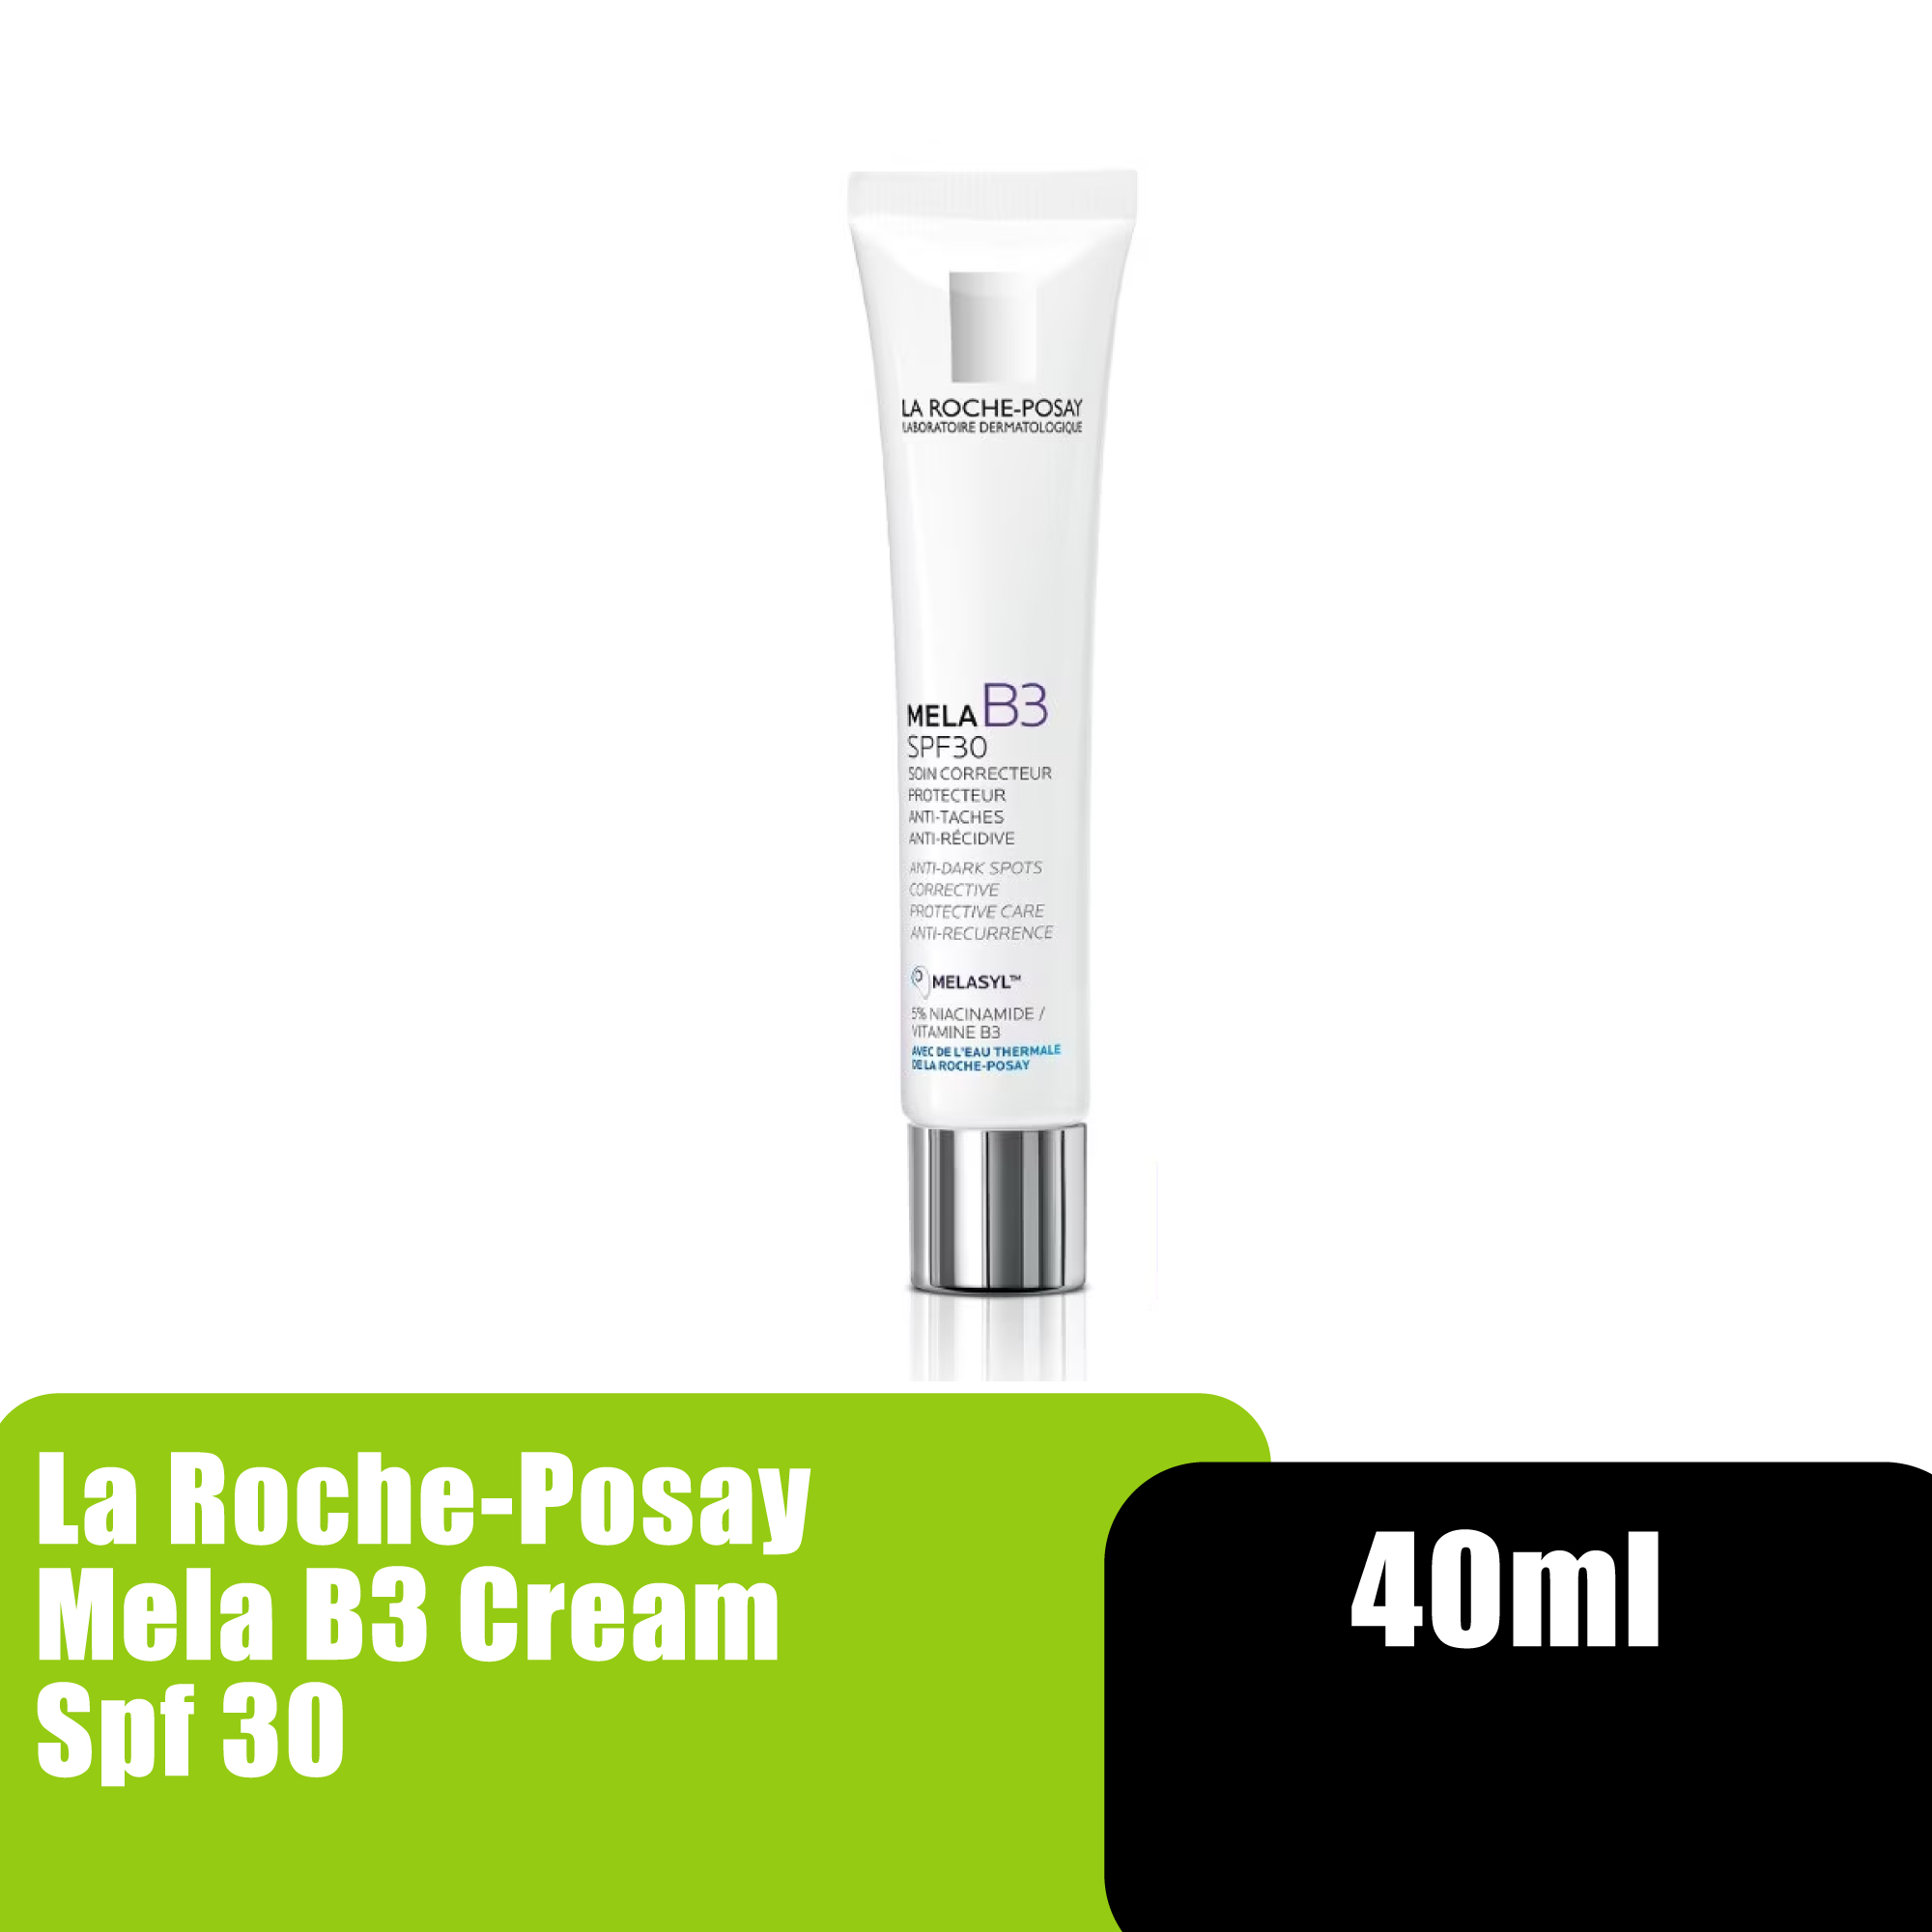 LA ROCHE POSAY Cream SPF30 Mela B3 (40ml) with Melasyl for Anti Aging, Anti Wrinkle Dark Spot Cream SPF30, Skin Barrier